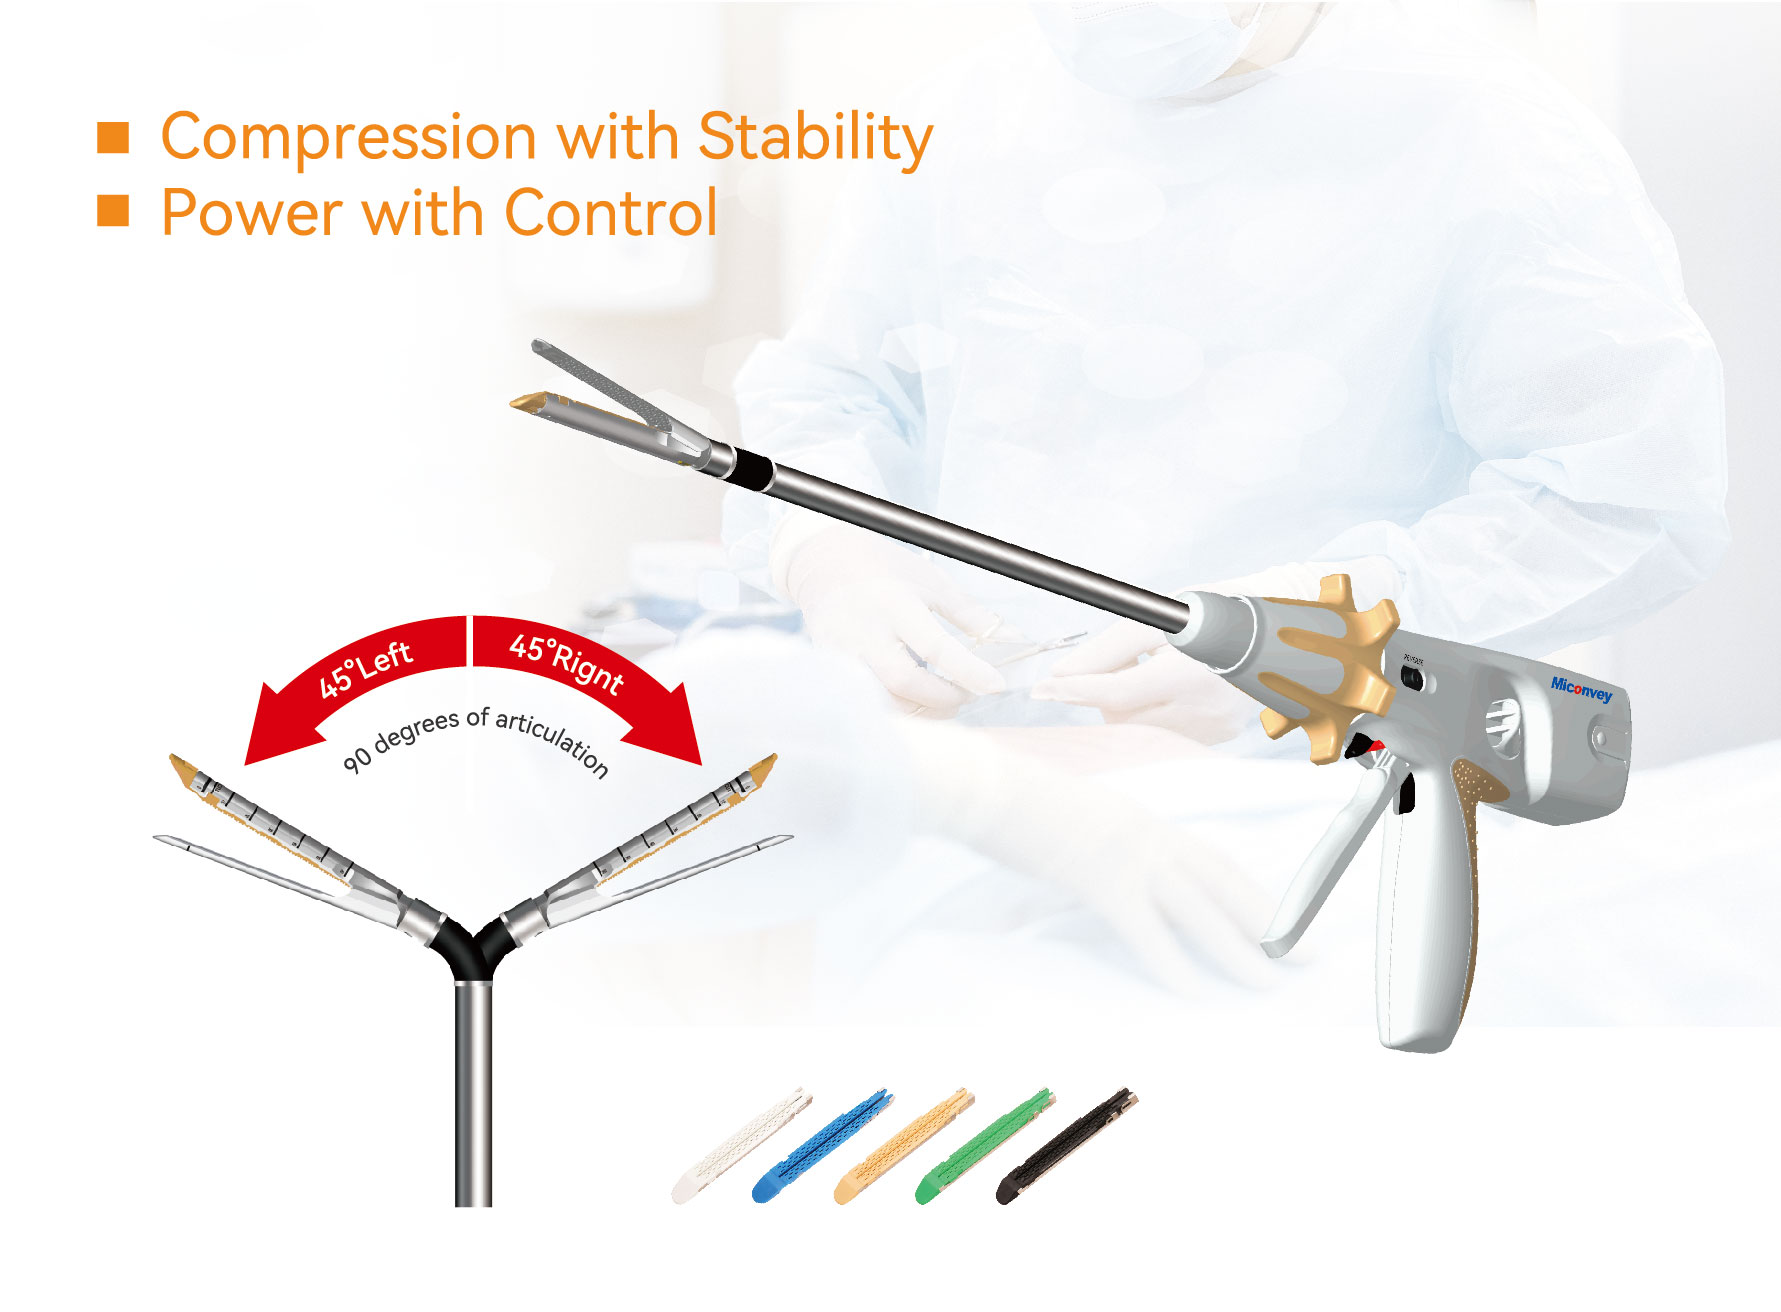 Miconvey Stapler Surgery - Disposable Powered Endoscopic Linear Stapler